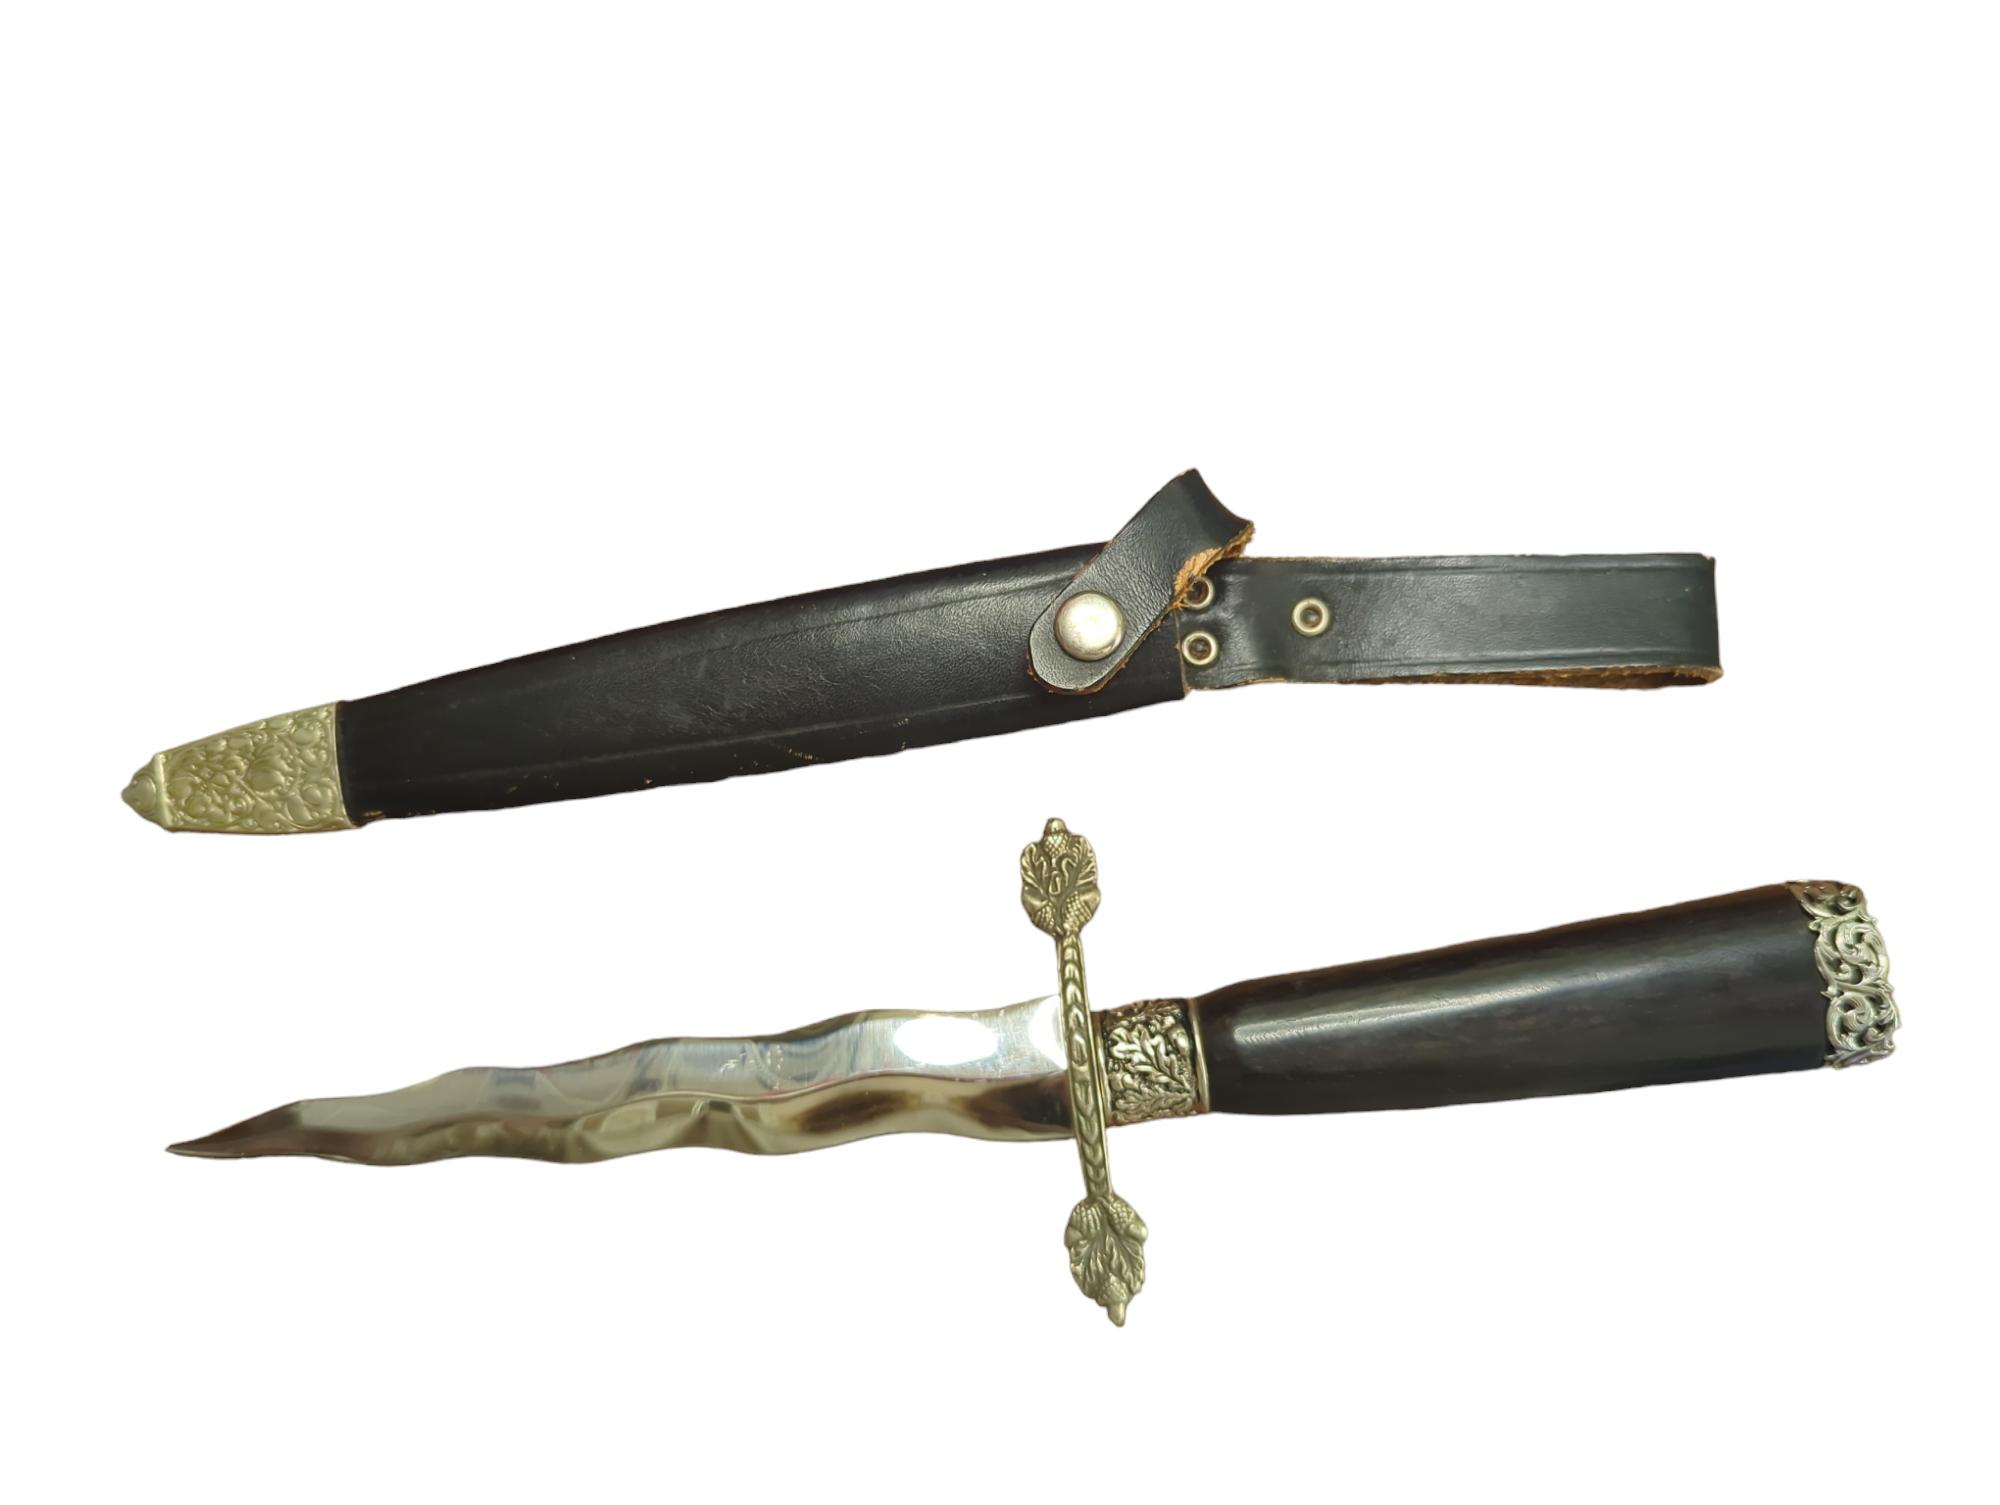 11.5" jagged dagger knife with sheath